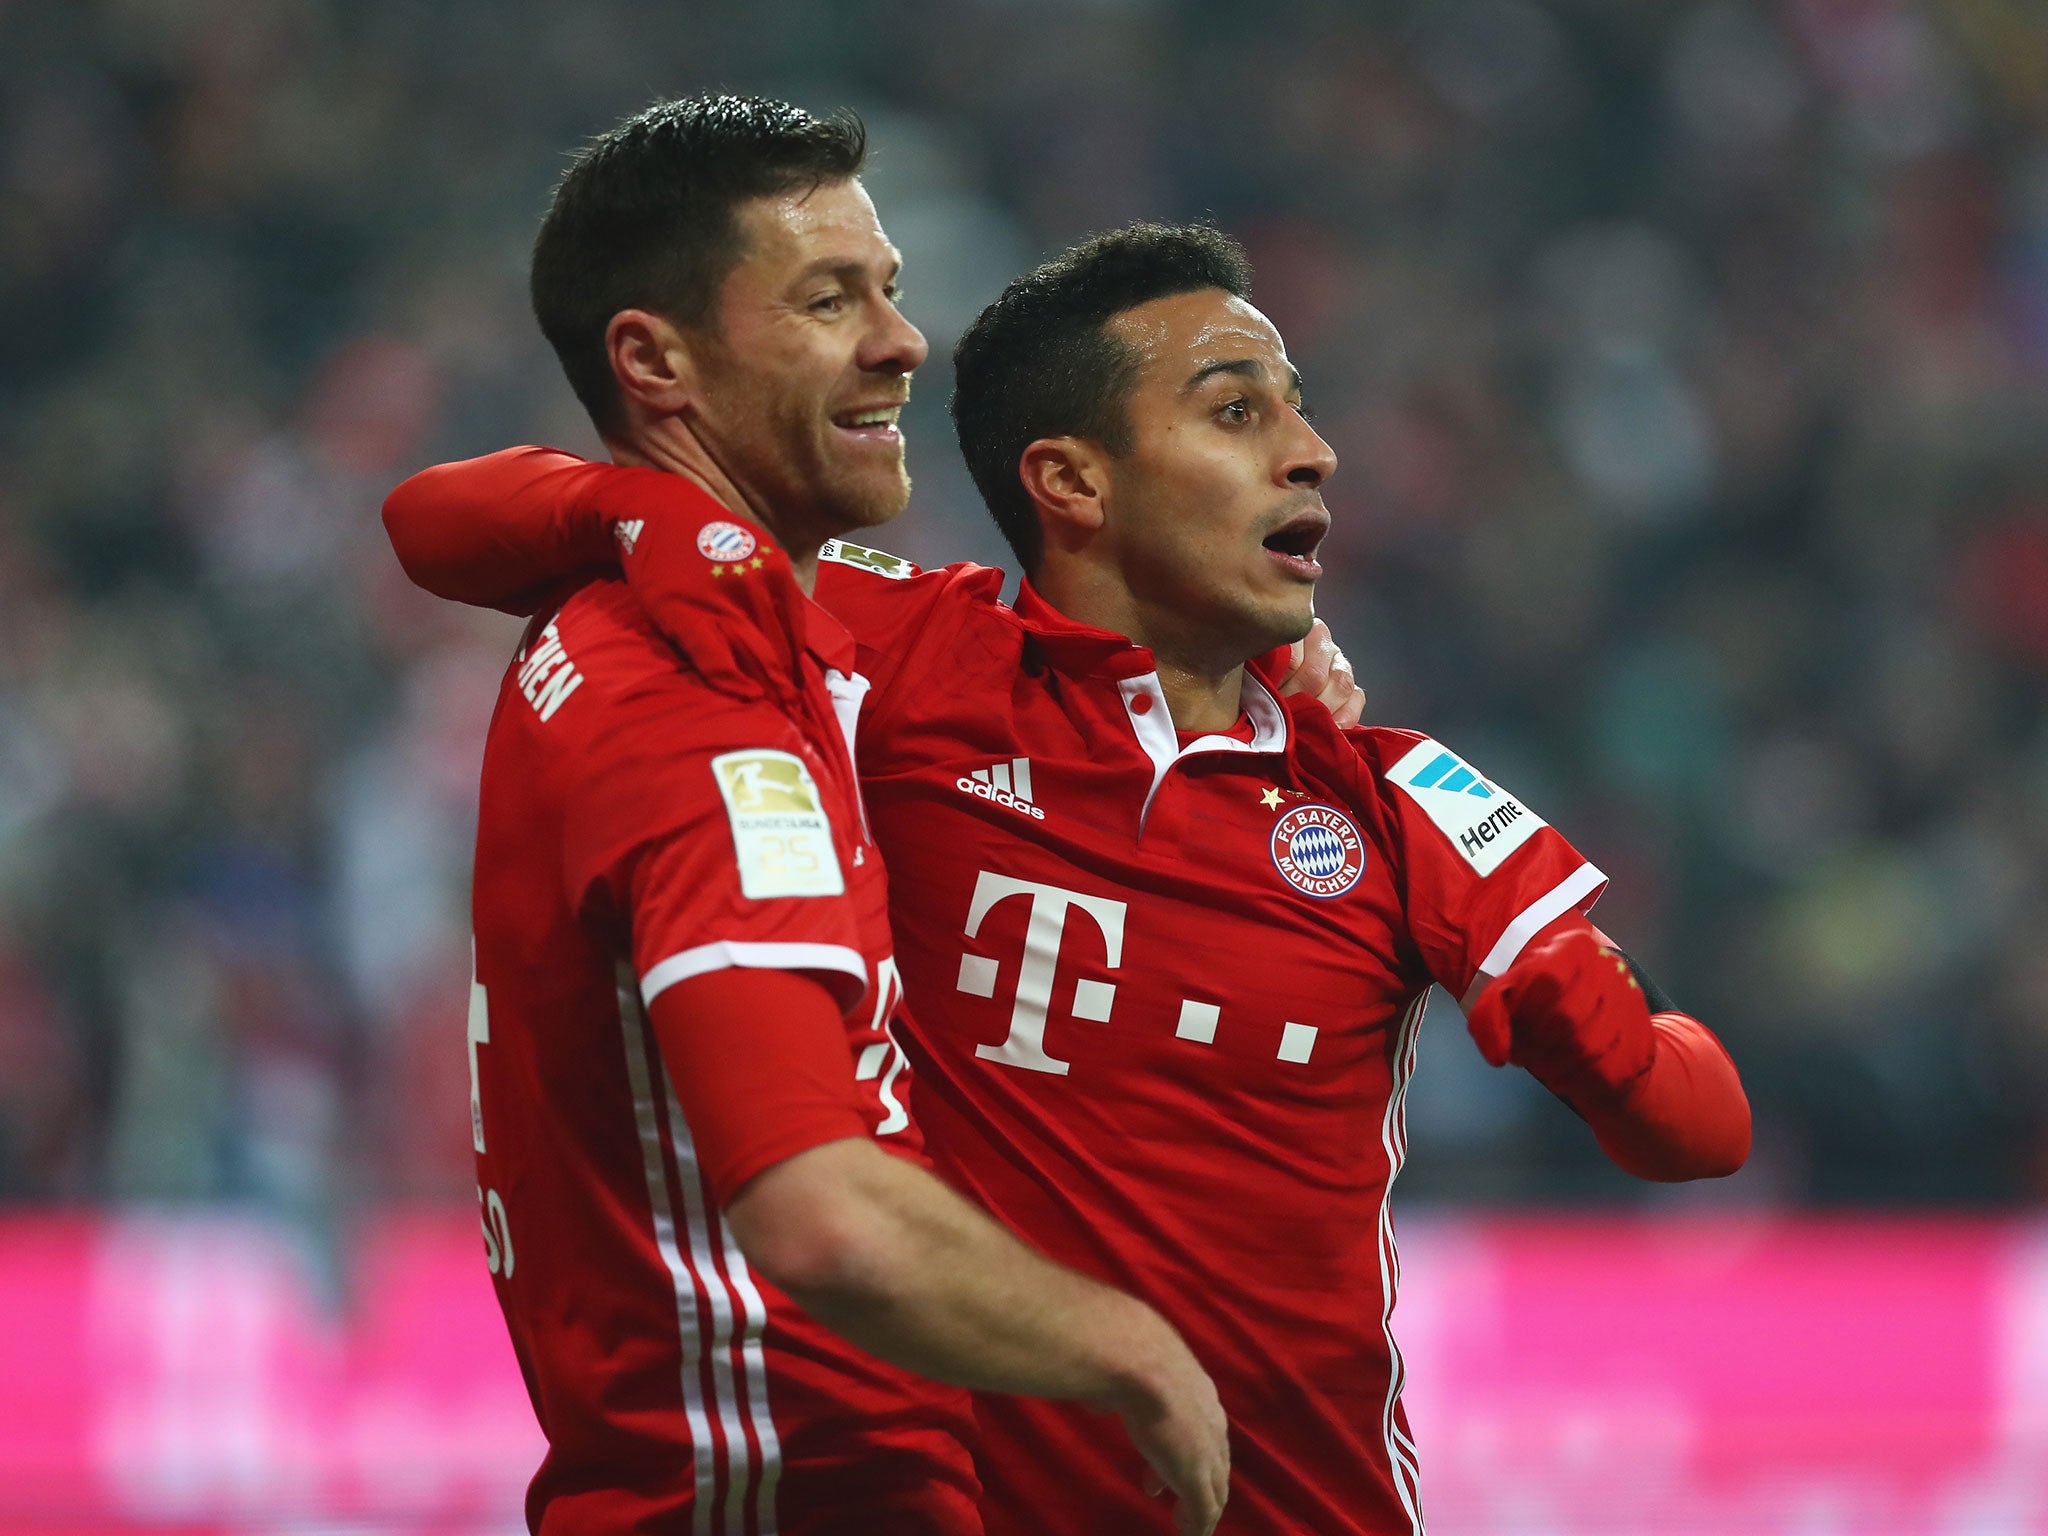 Xabi Alonso and Thiago Alcantara celebrate during Bayern Munich's 3-0 win over Leipzig